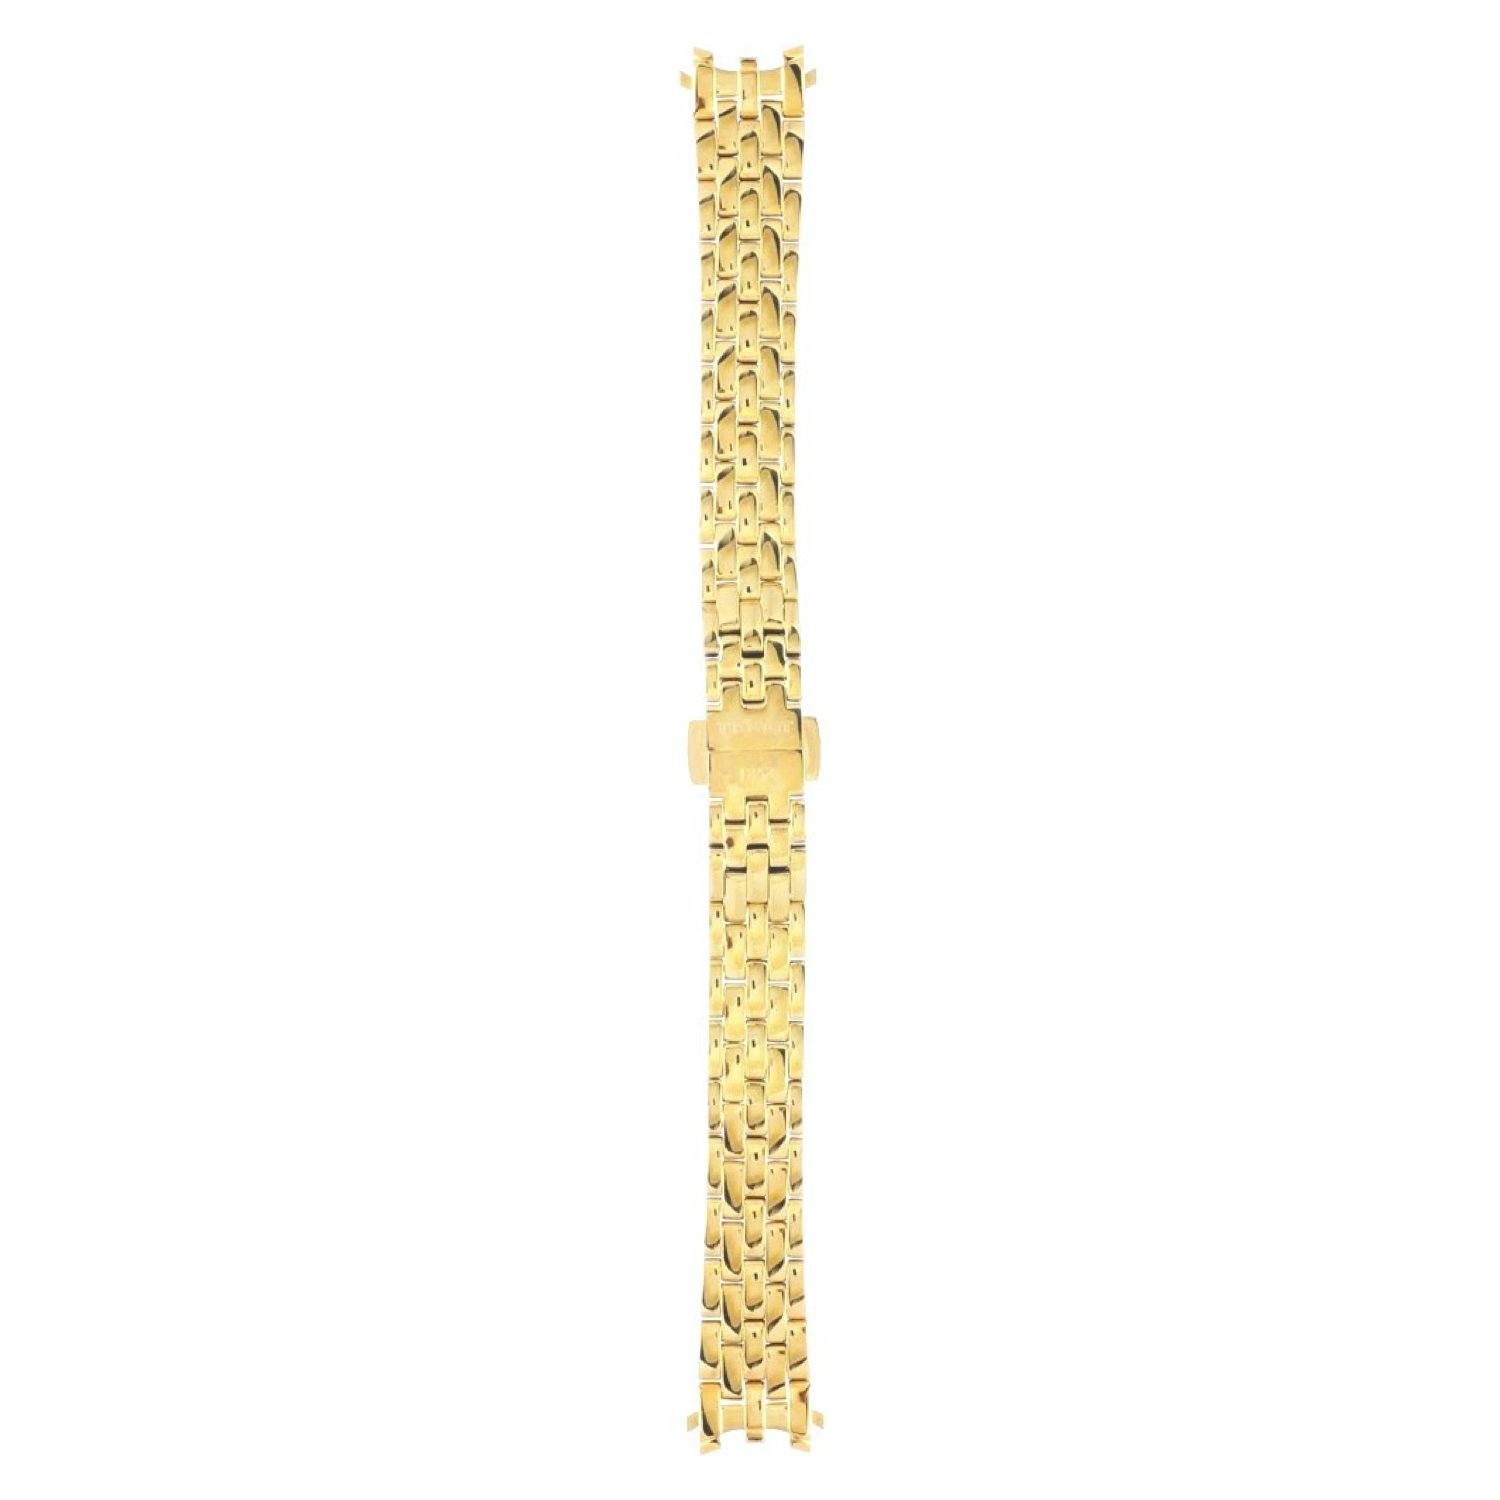 Genuine Tissot 14mm Ballade lll Gold Coated Steel Bracelet by Tissot